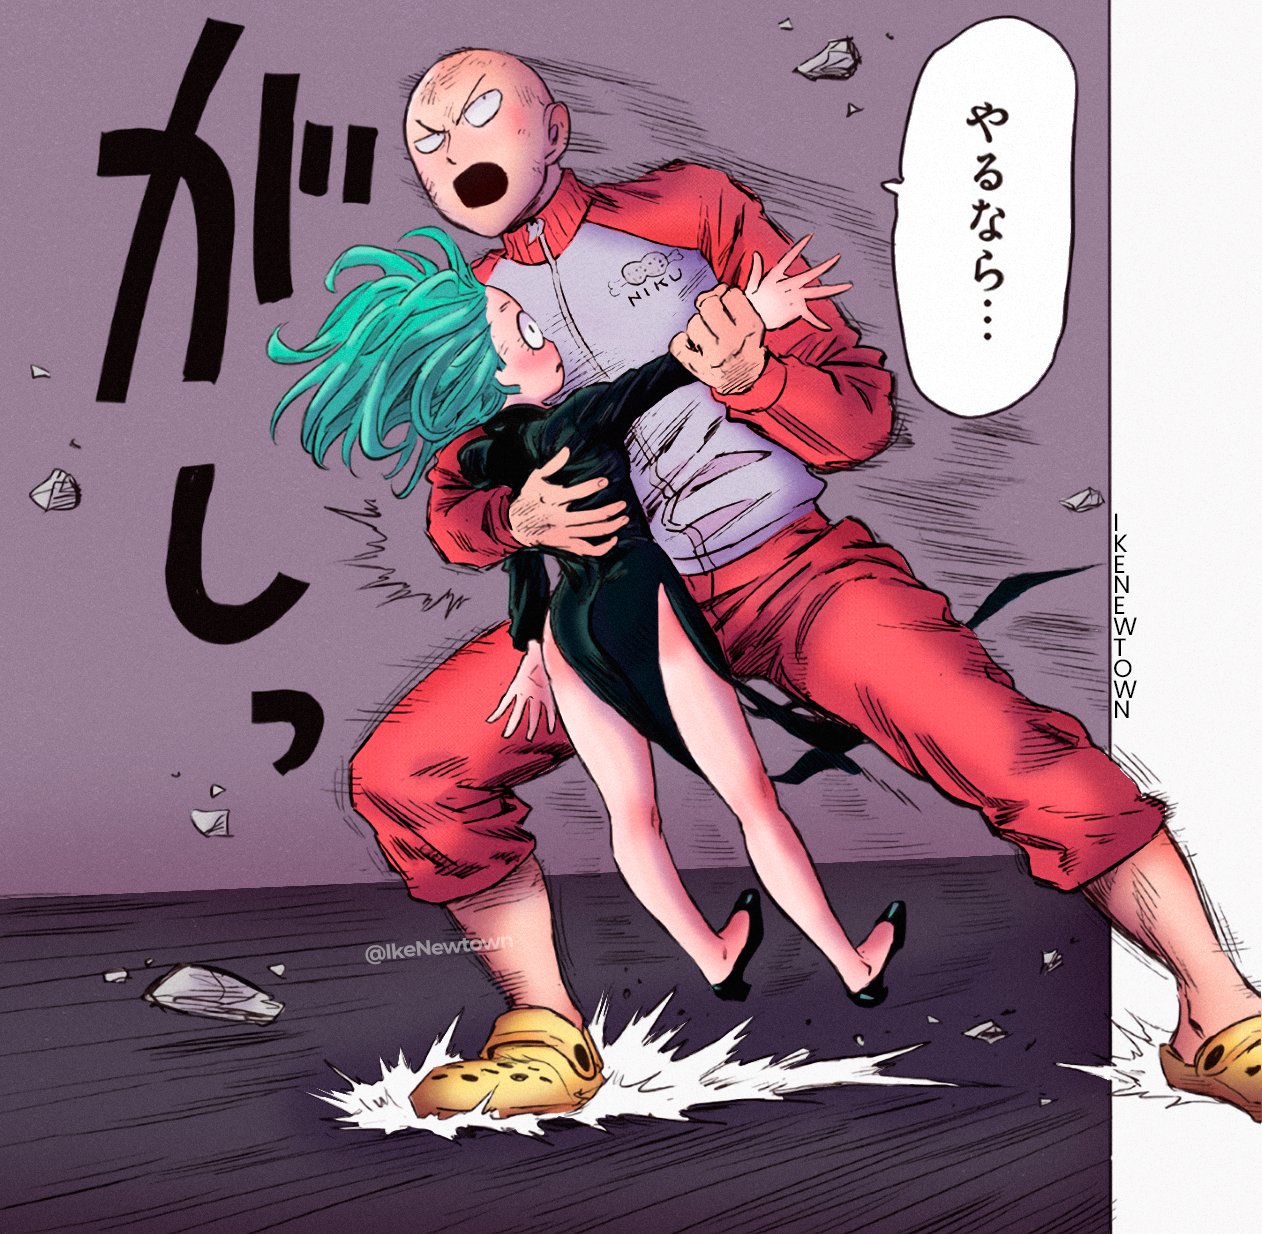 Tatsumaki (Coloured), One-Punch Man